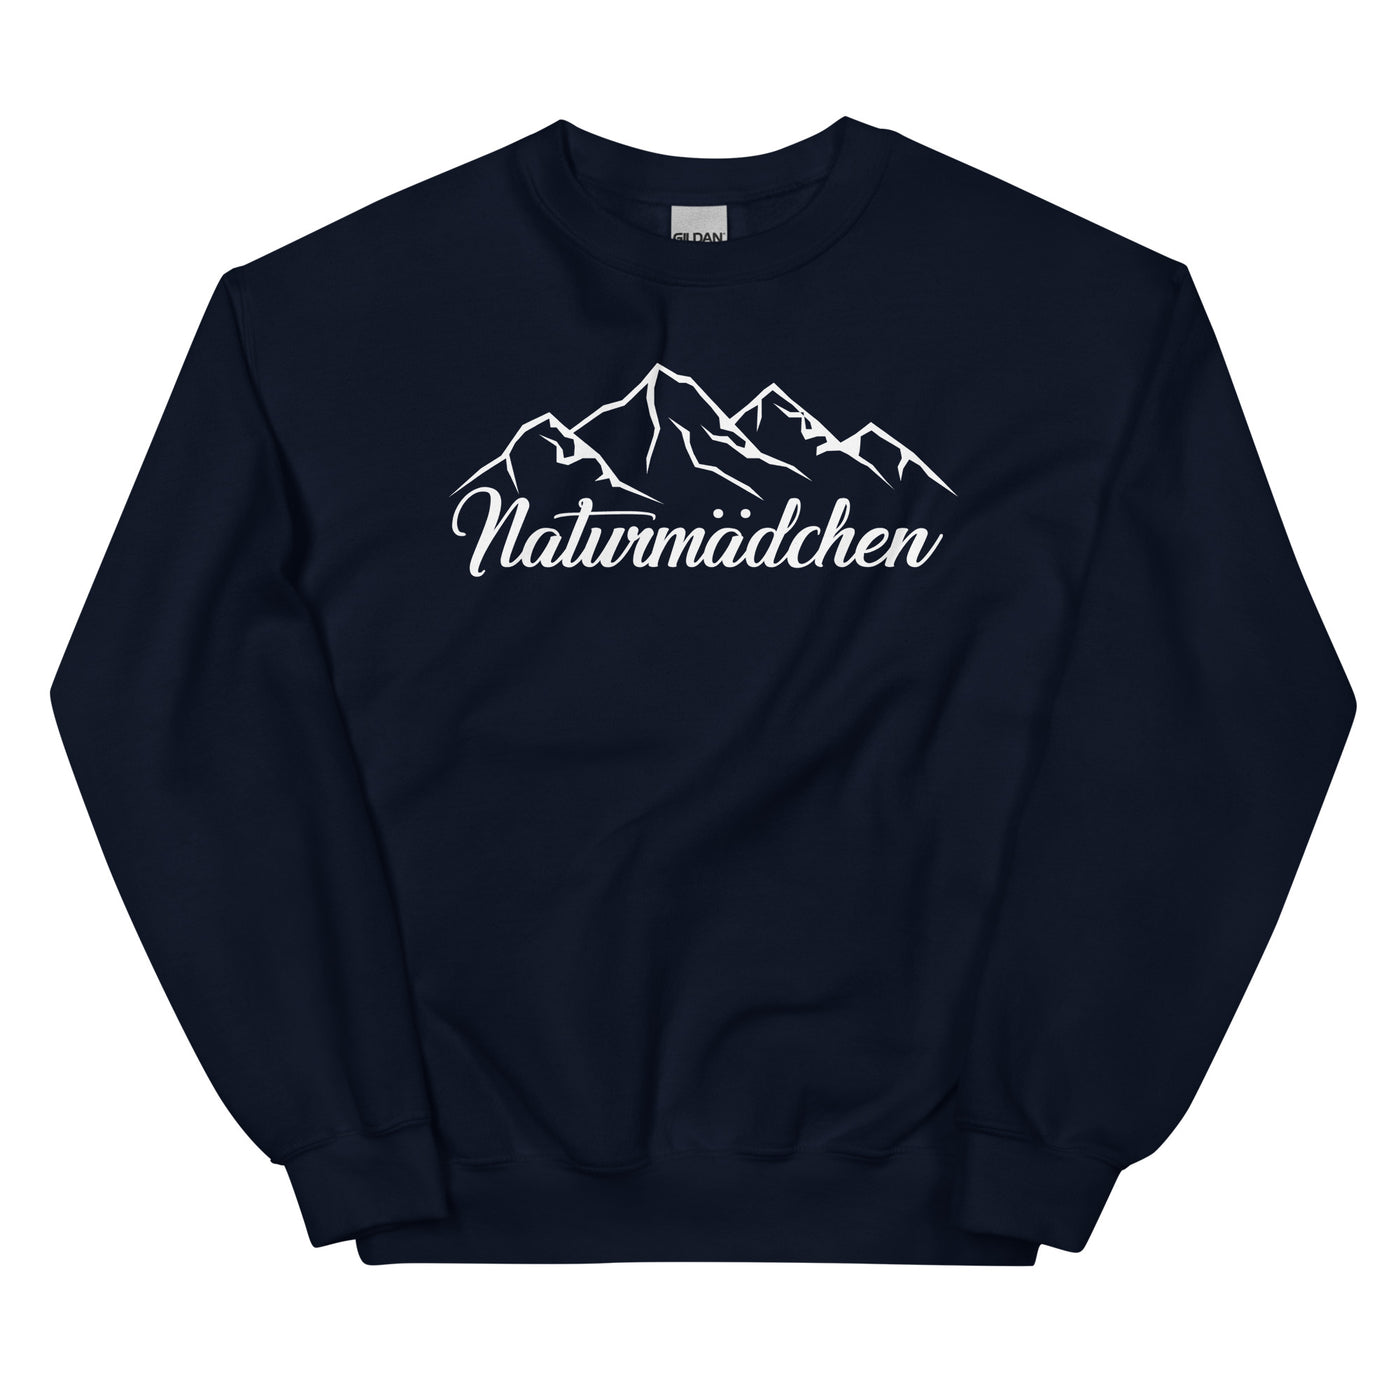 Naturmadchen - Sweatshirt (Unisex) berge xxx yyy zzz Navy